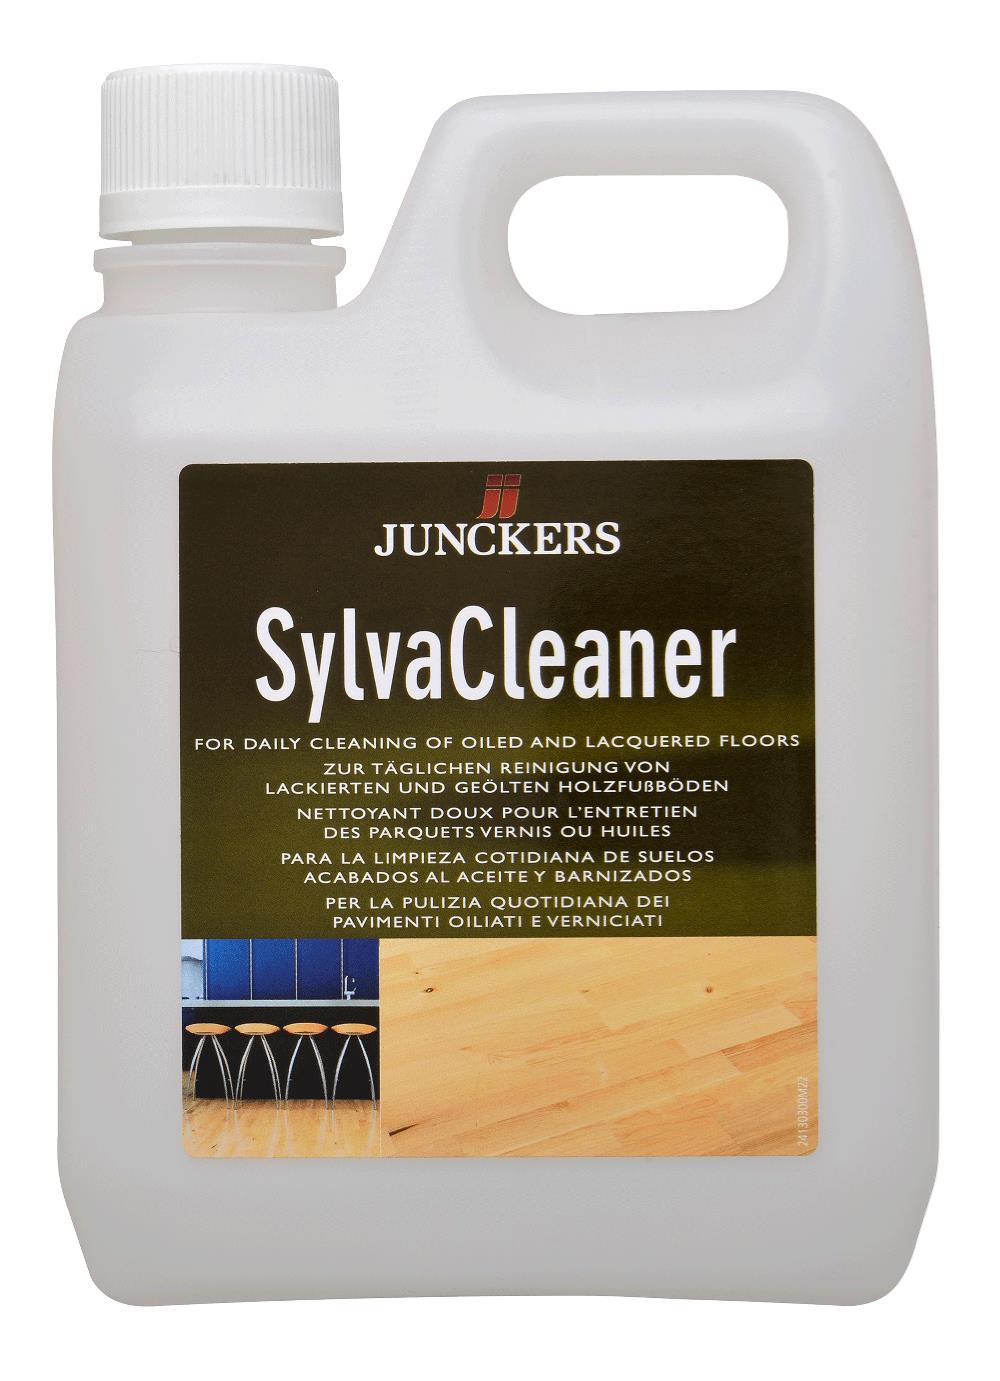 Junckers SylvaCleaner 2.5L